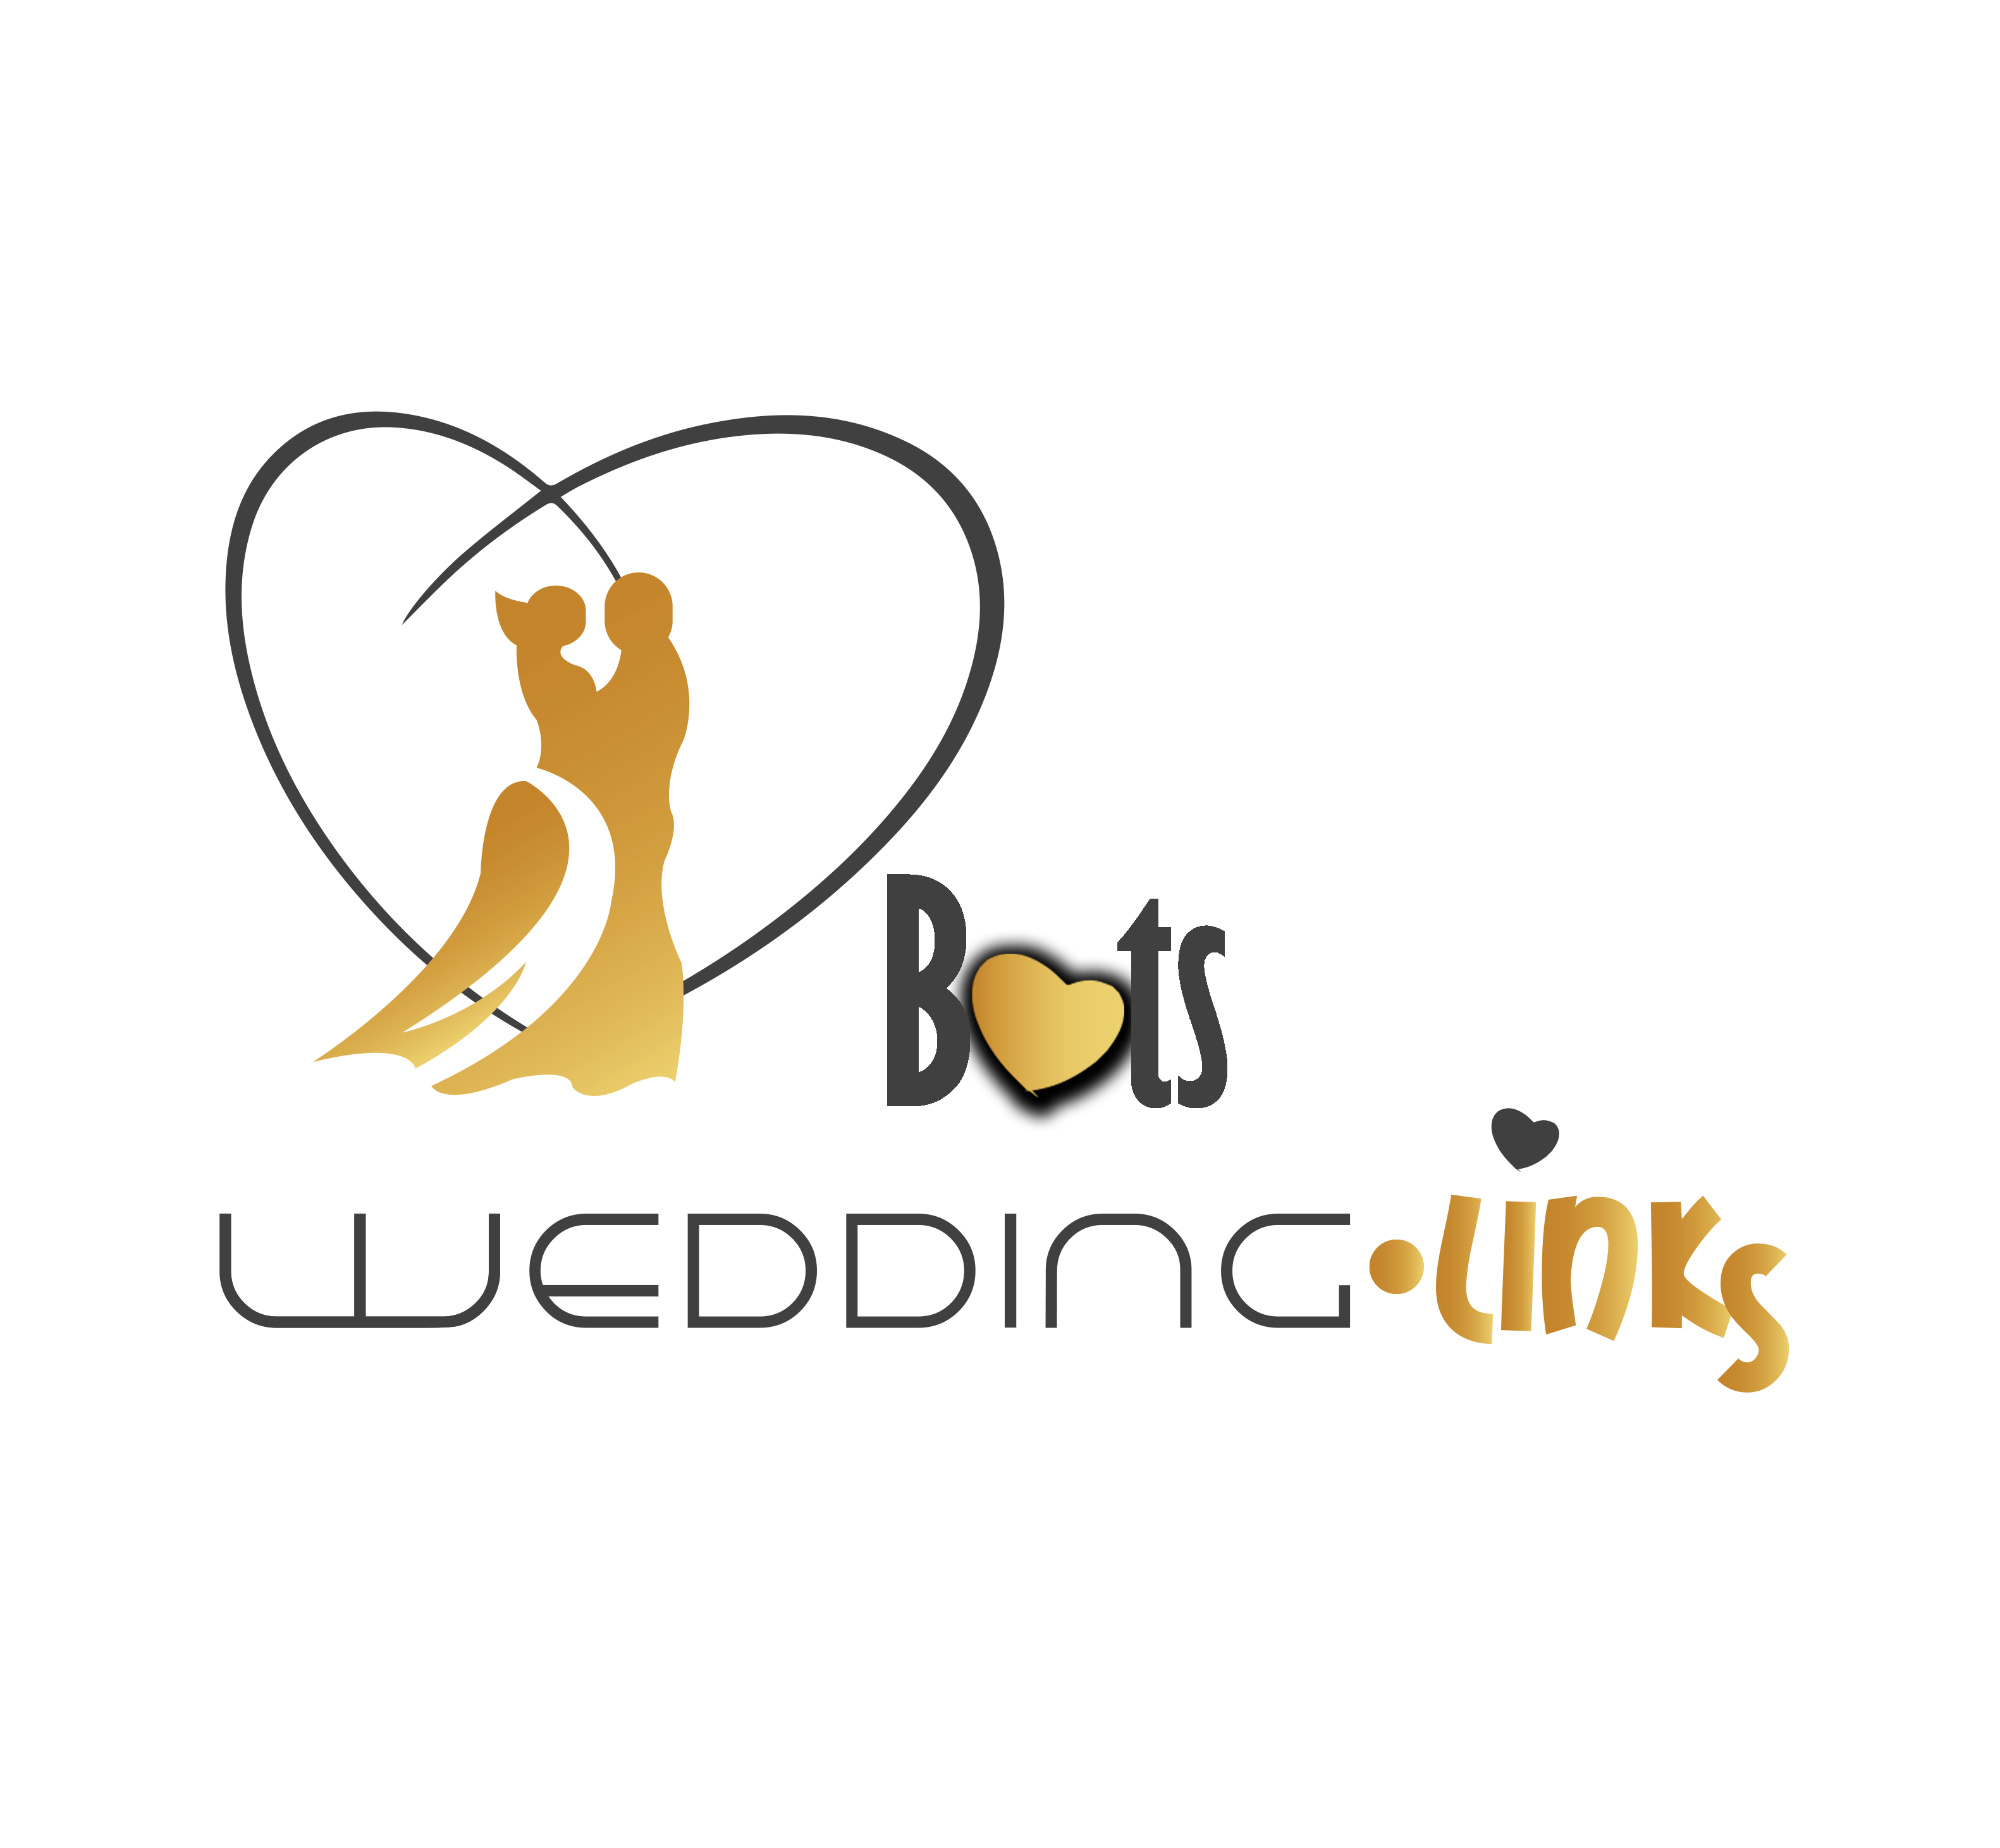 weddingdir brand logo